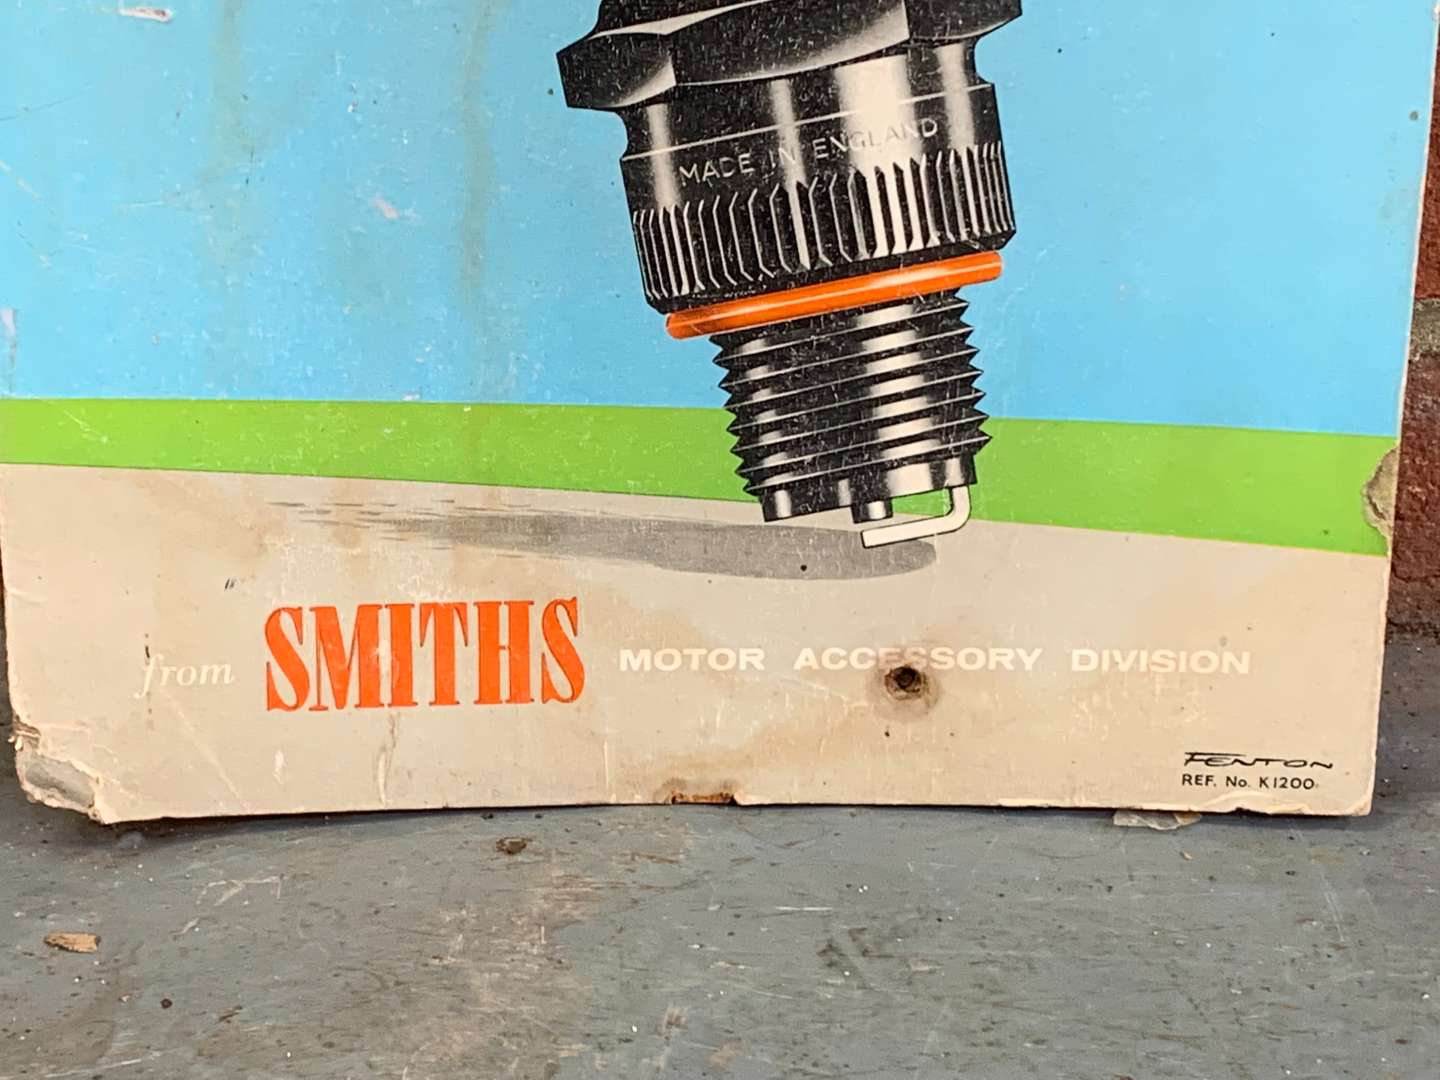 <p>Original K.L.G Spark Plugs Smiths Cardboard Sign</p>